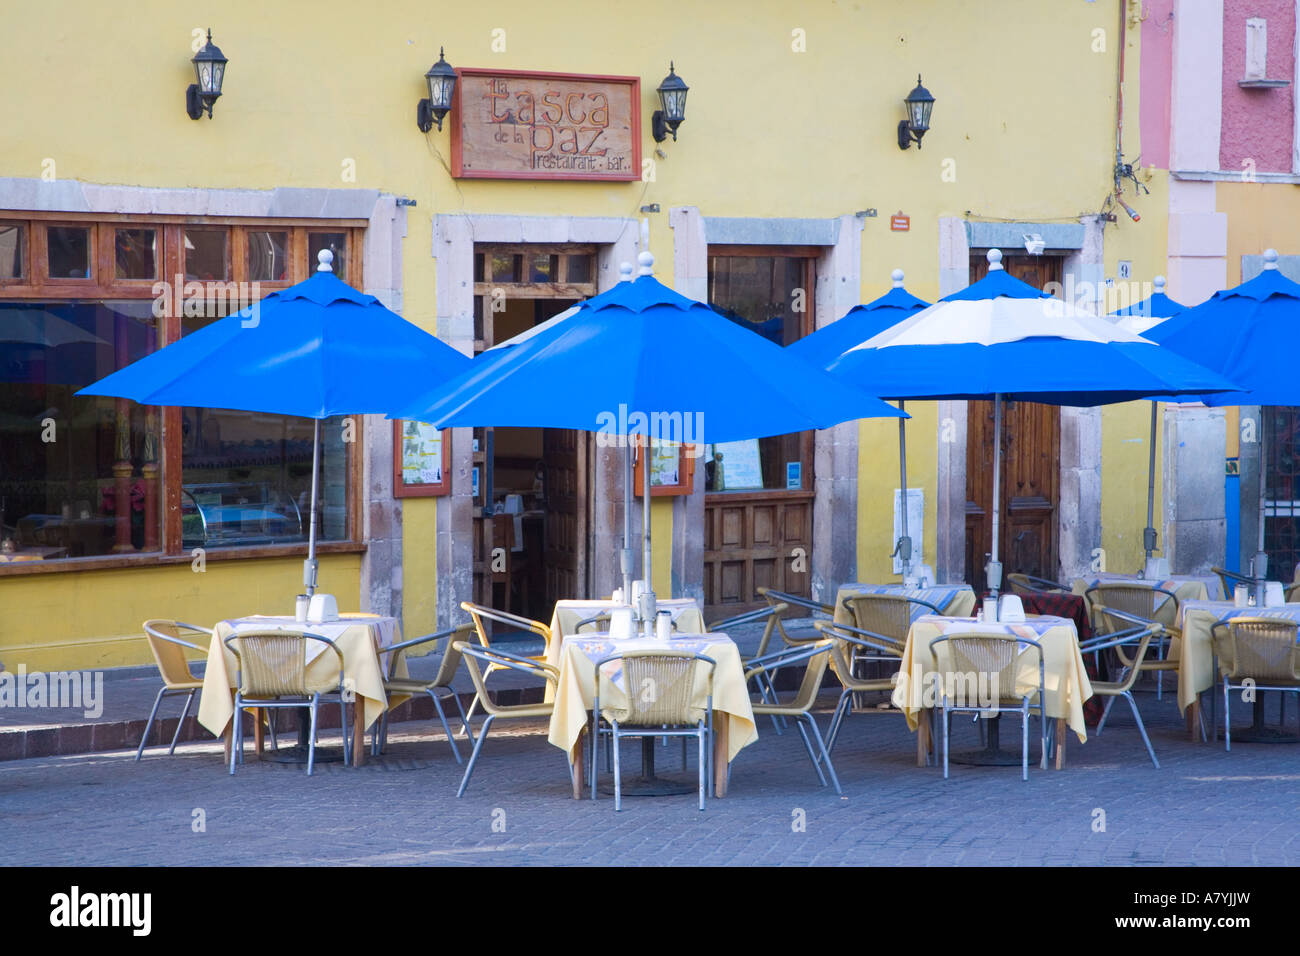 North America, Mexico, Guanajuato. Restaurant Tasca de la Paz with outdoor seating. Stock Photo